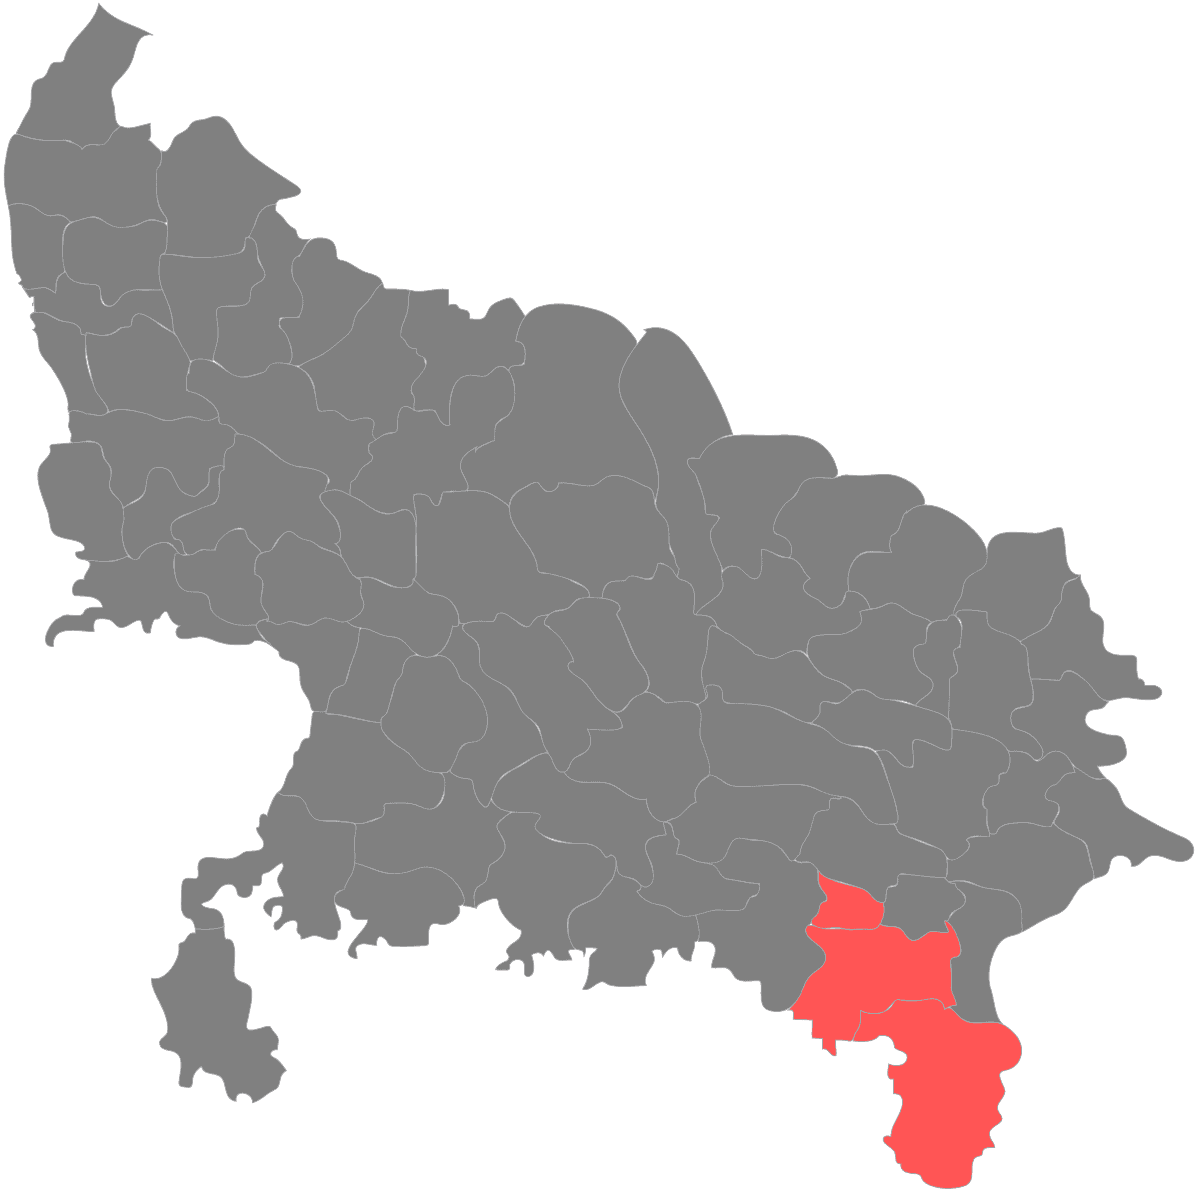 Mirzapur division